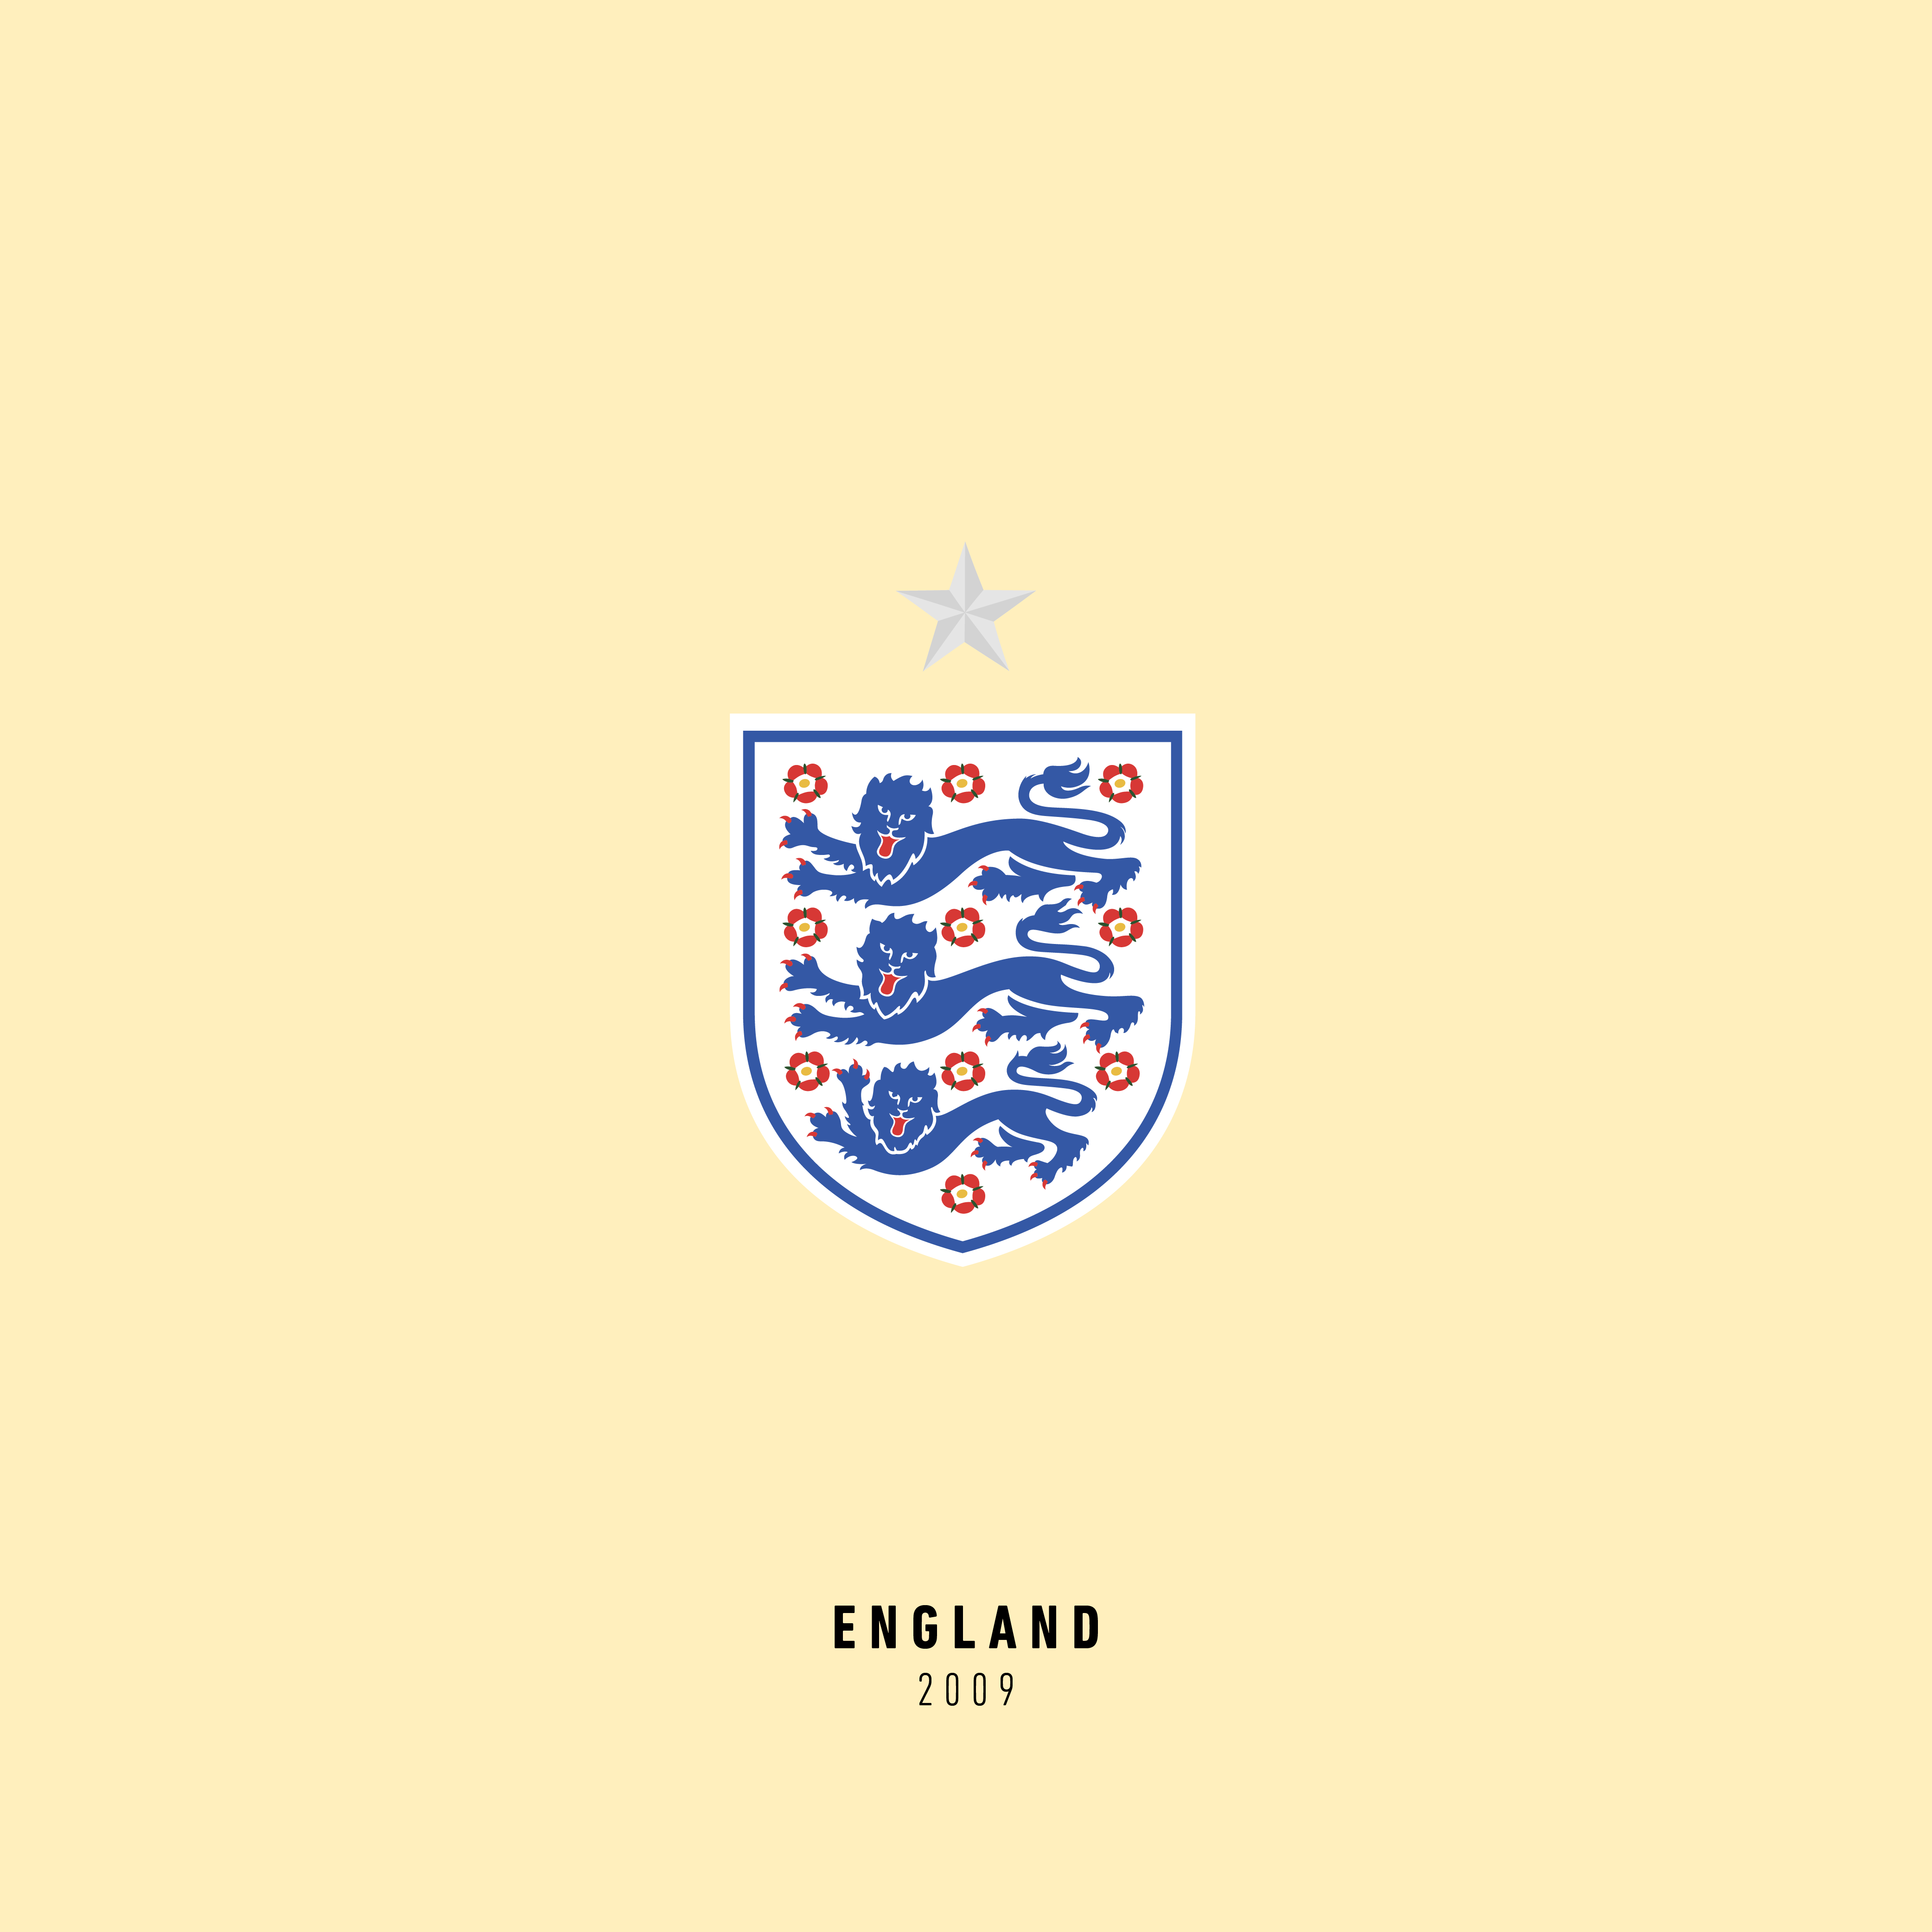 Euro2021 England 2021 2